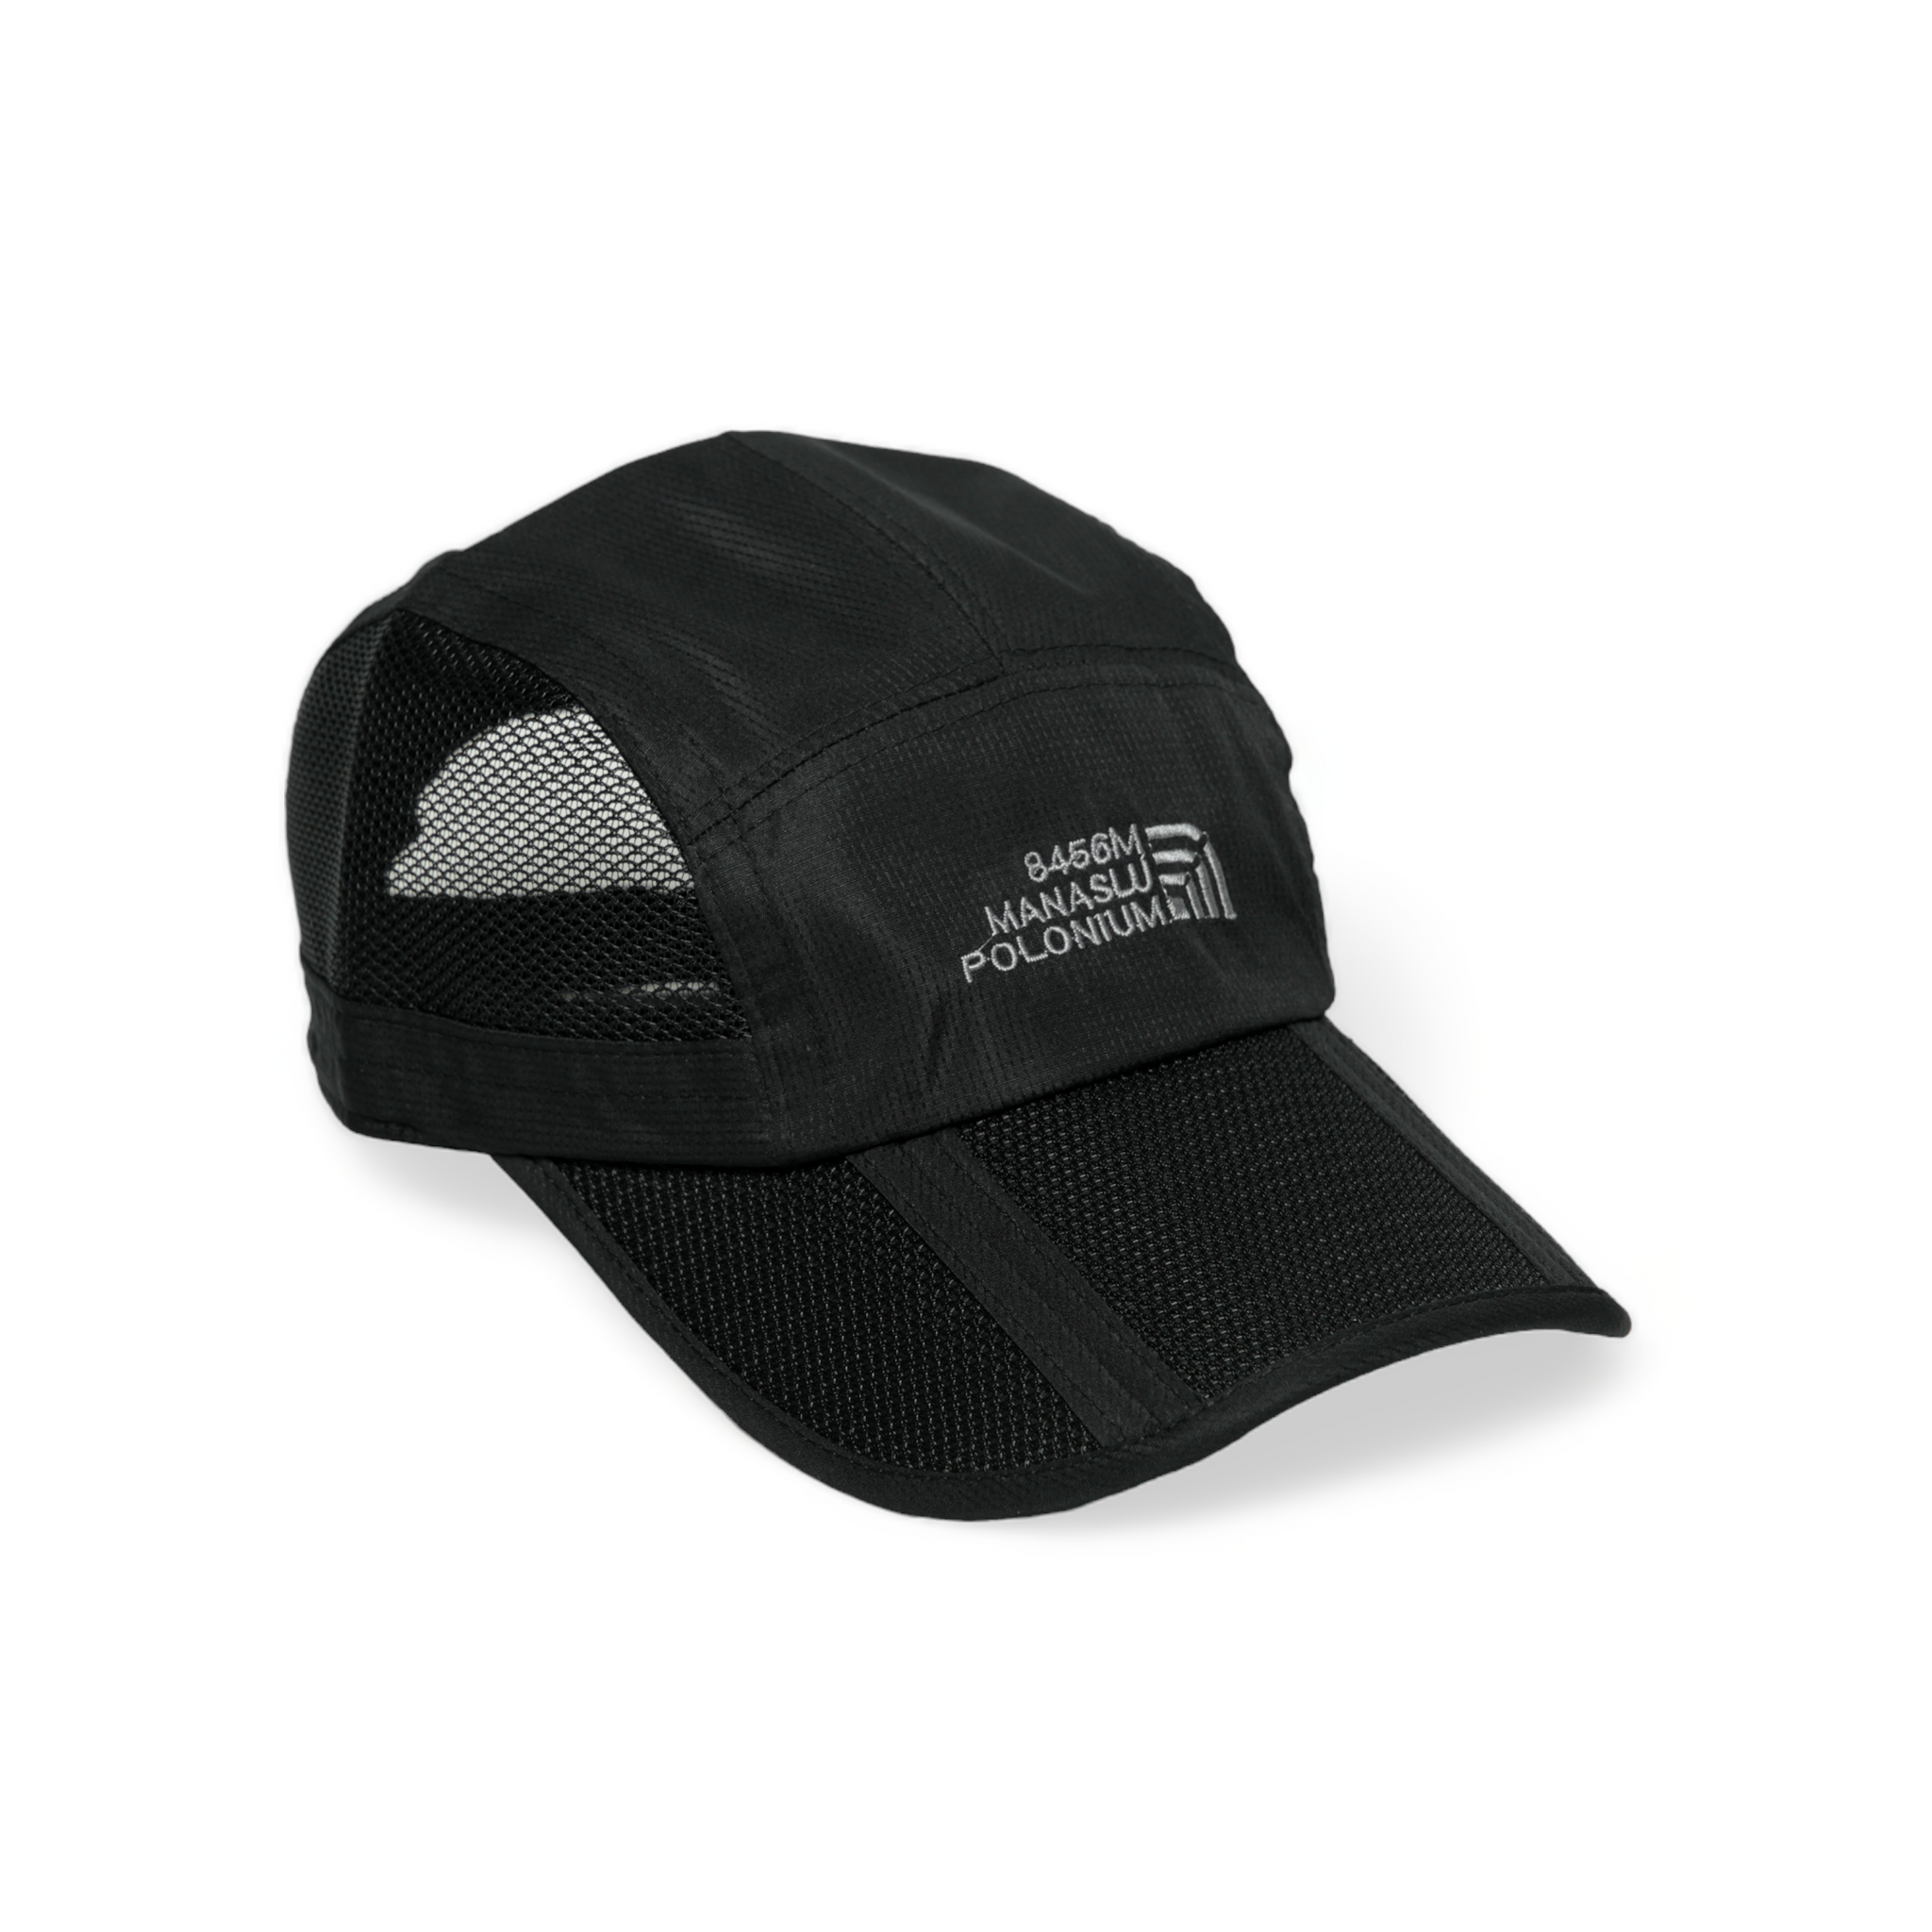 Chokore Foldable Baseball Cap (Black)